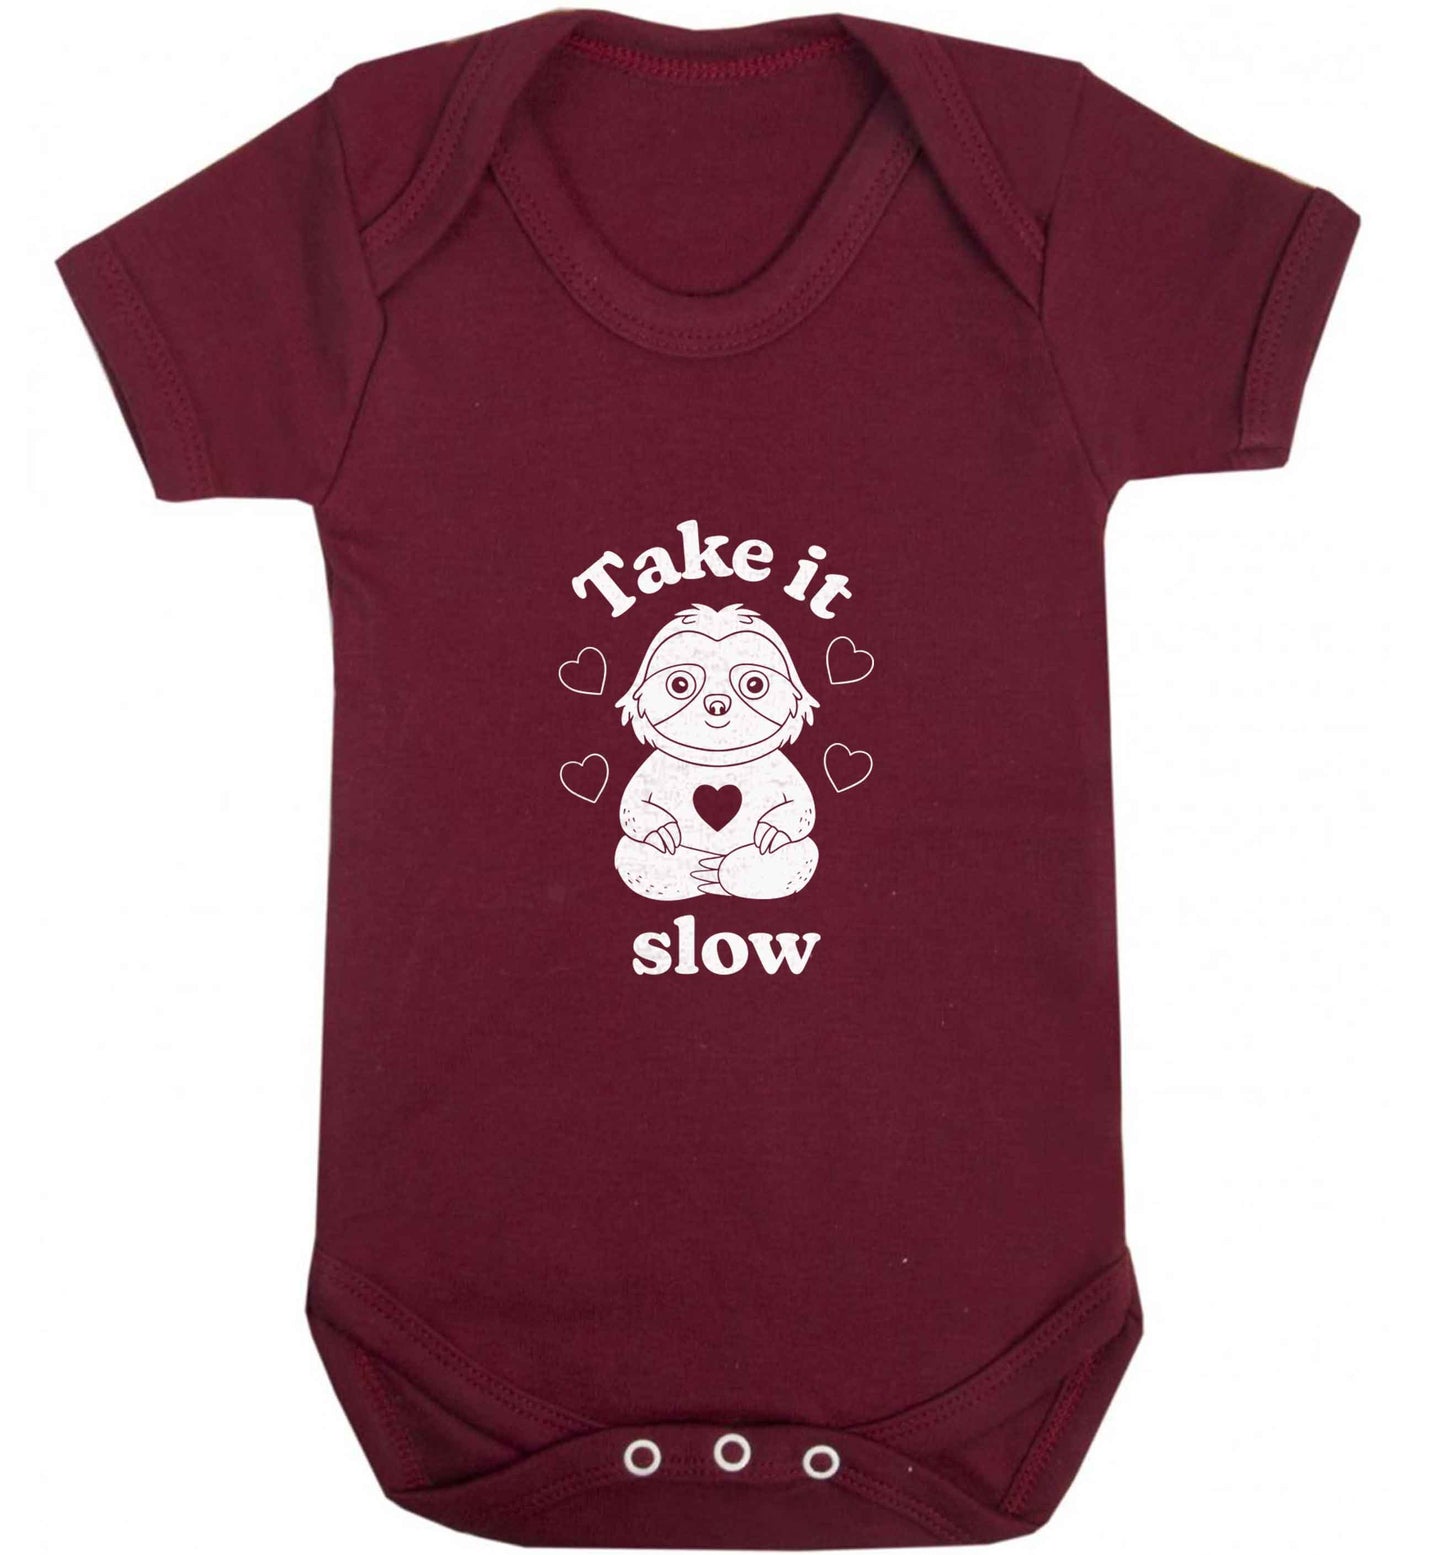 Take it slow baby vest maroon 18-24 months